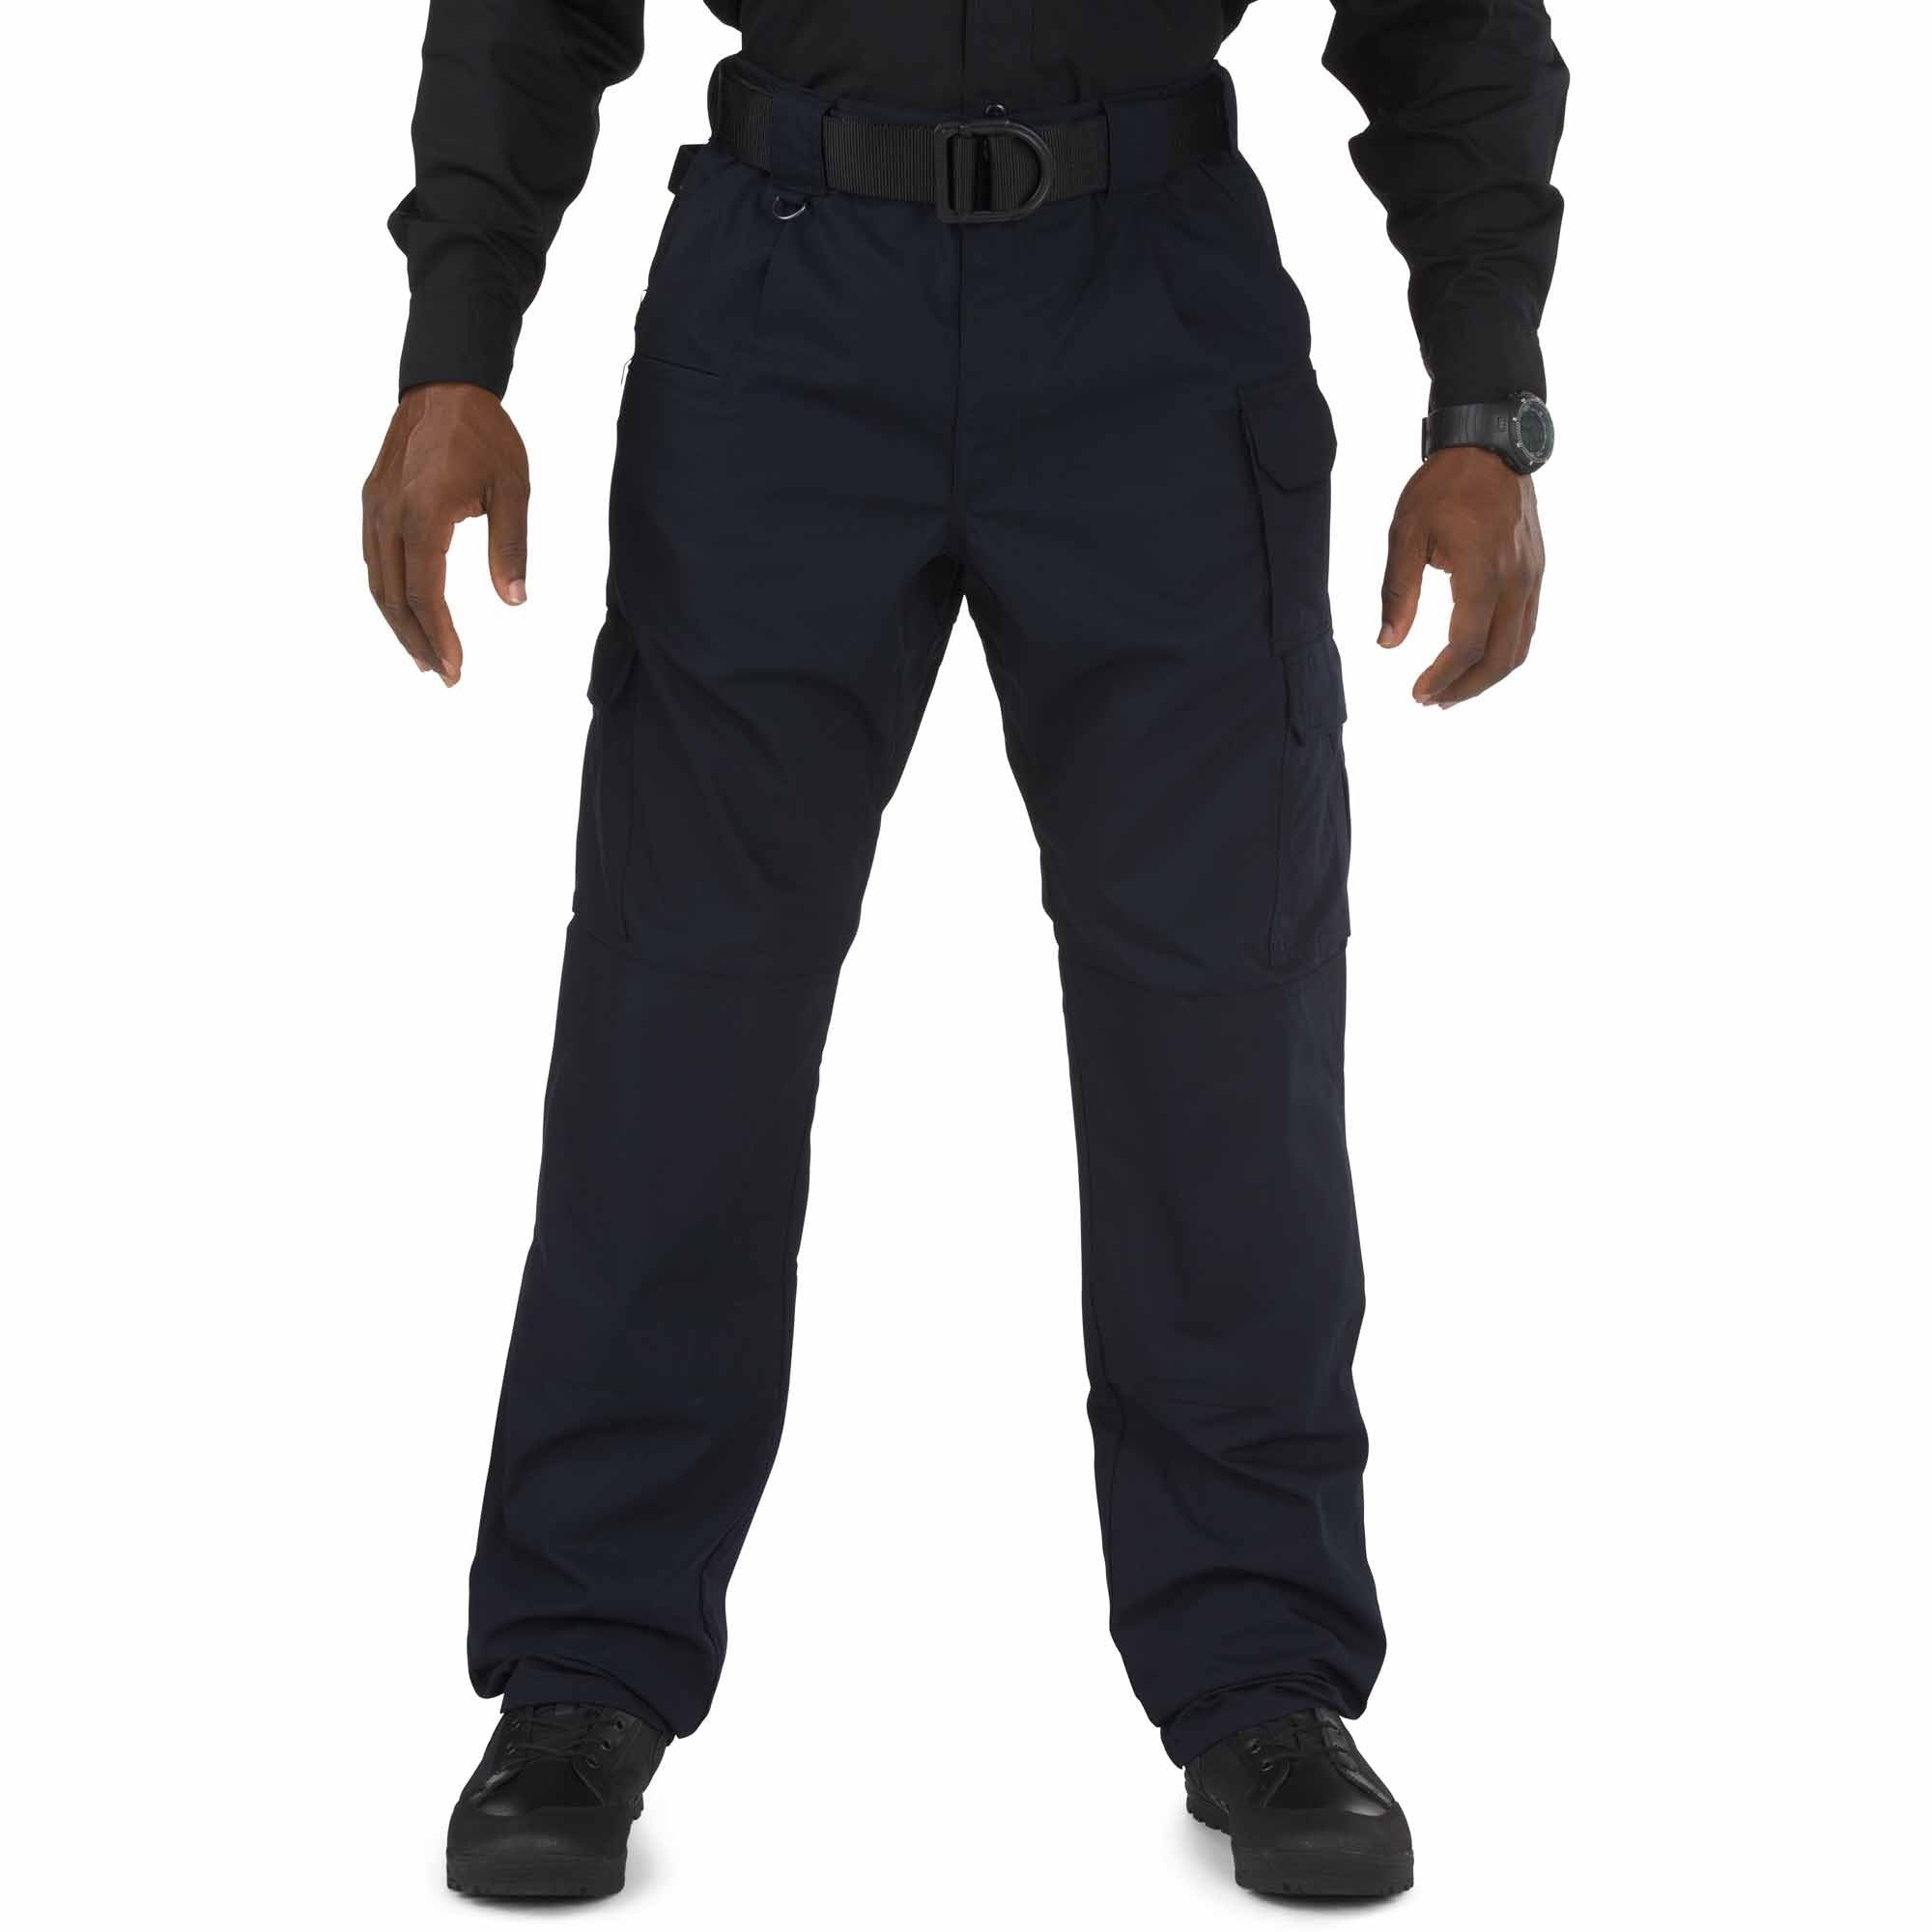 5.11 Tactical Taclite Pro Pants - Dark Navy Pants 5.11 Tactical 28 30 Tactical Gear Supplier Tactical Distributors Australia